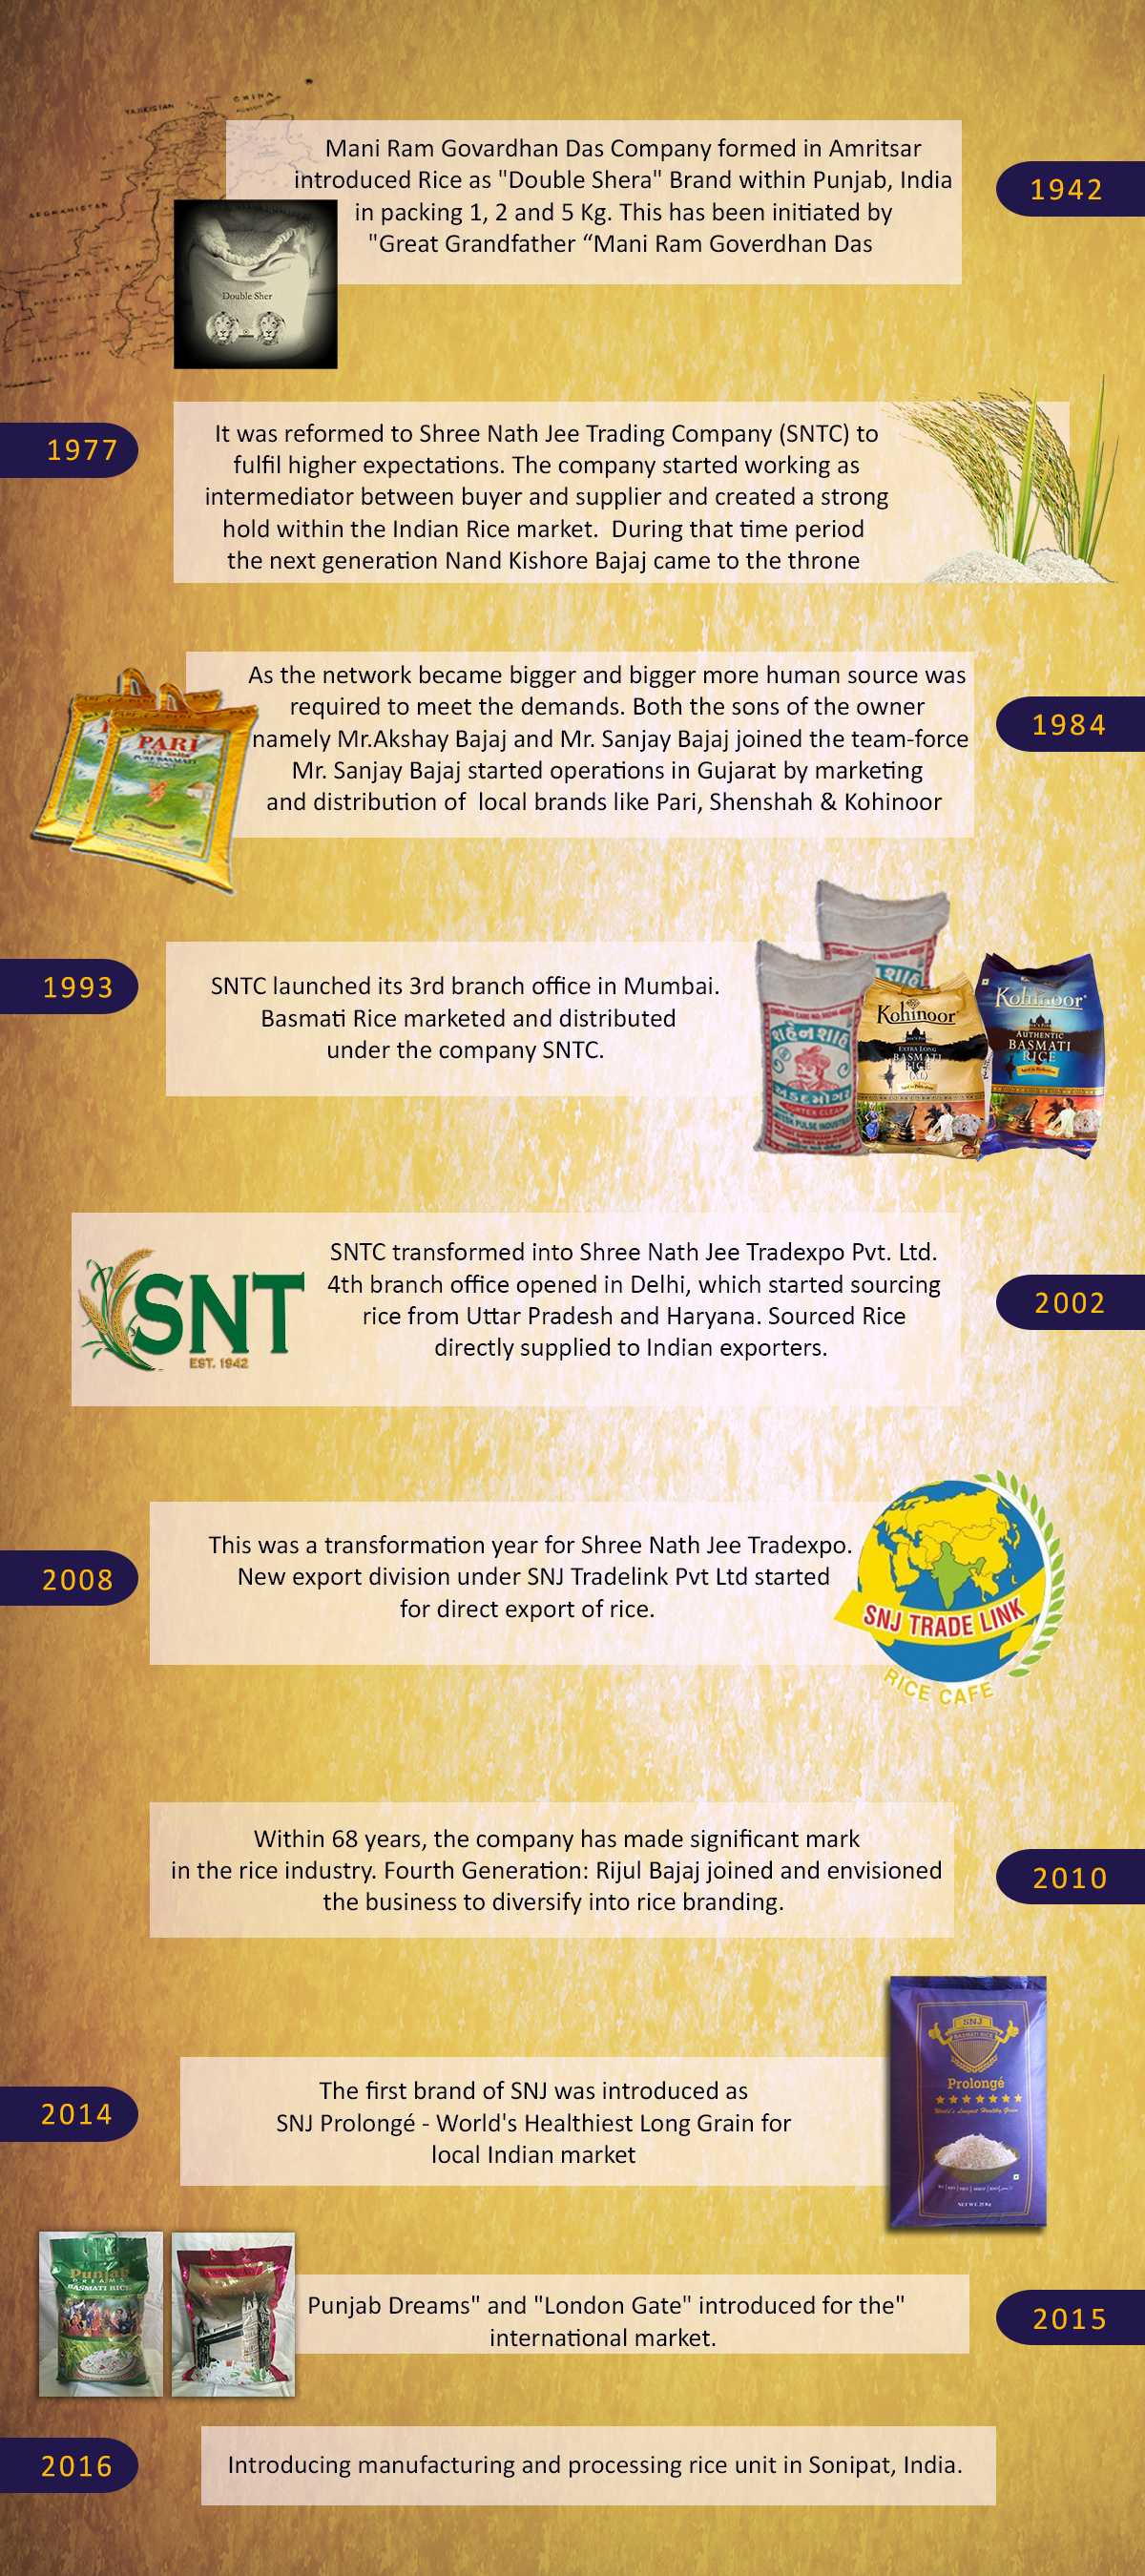 Heritage - SNJ Tradelink